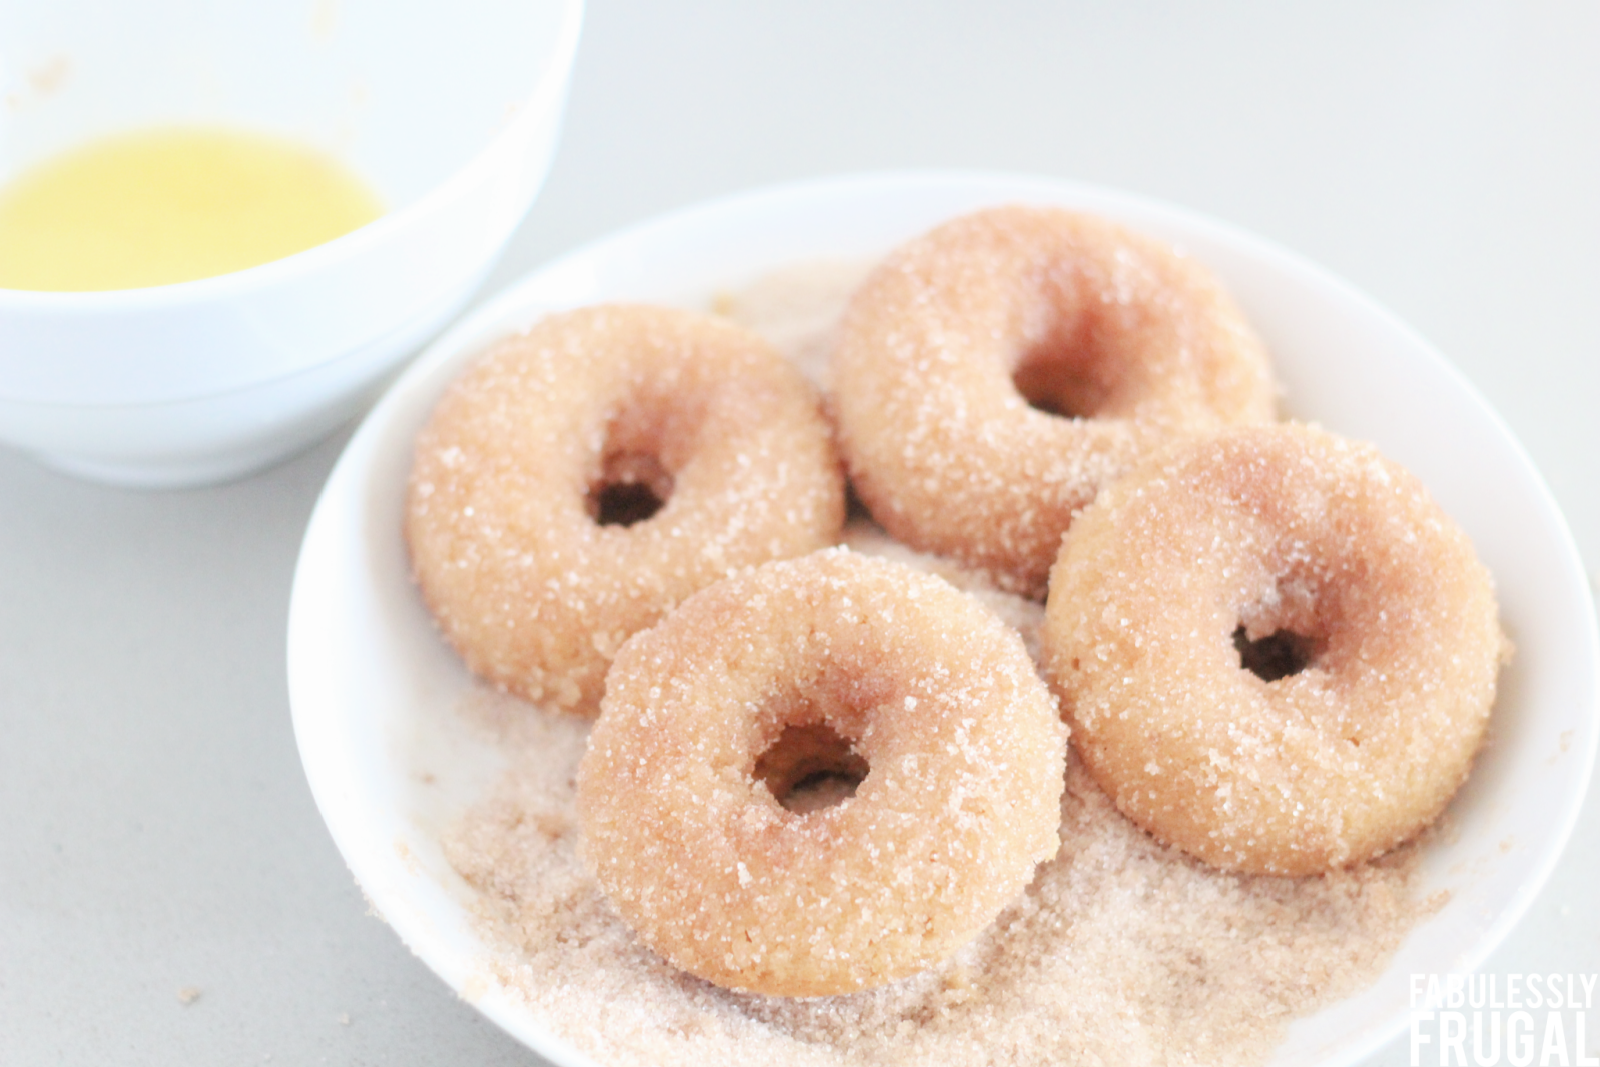 air fryer cake donuts with cinnamon sugar coating